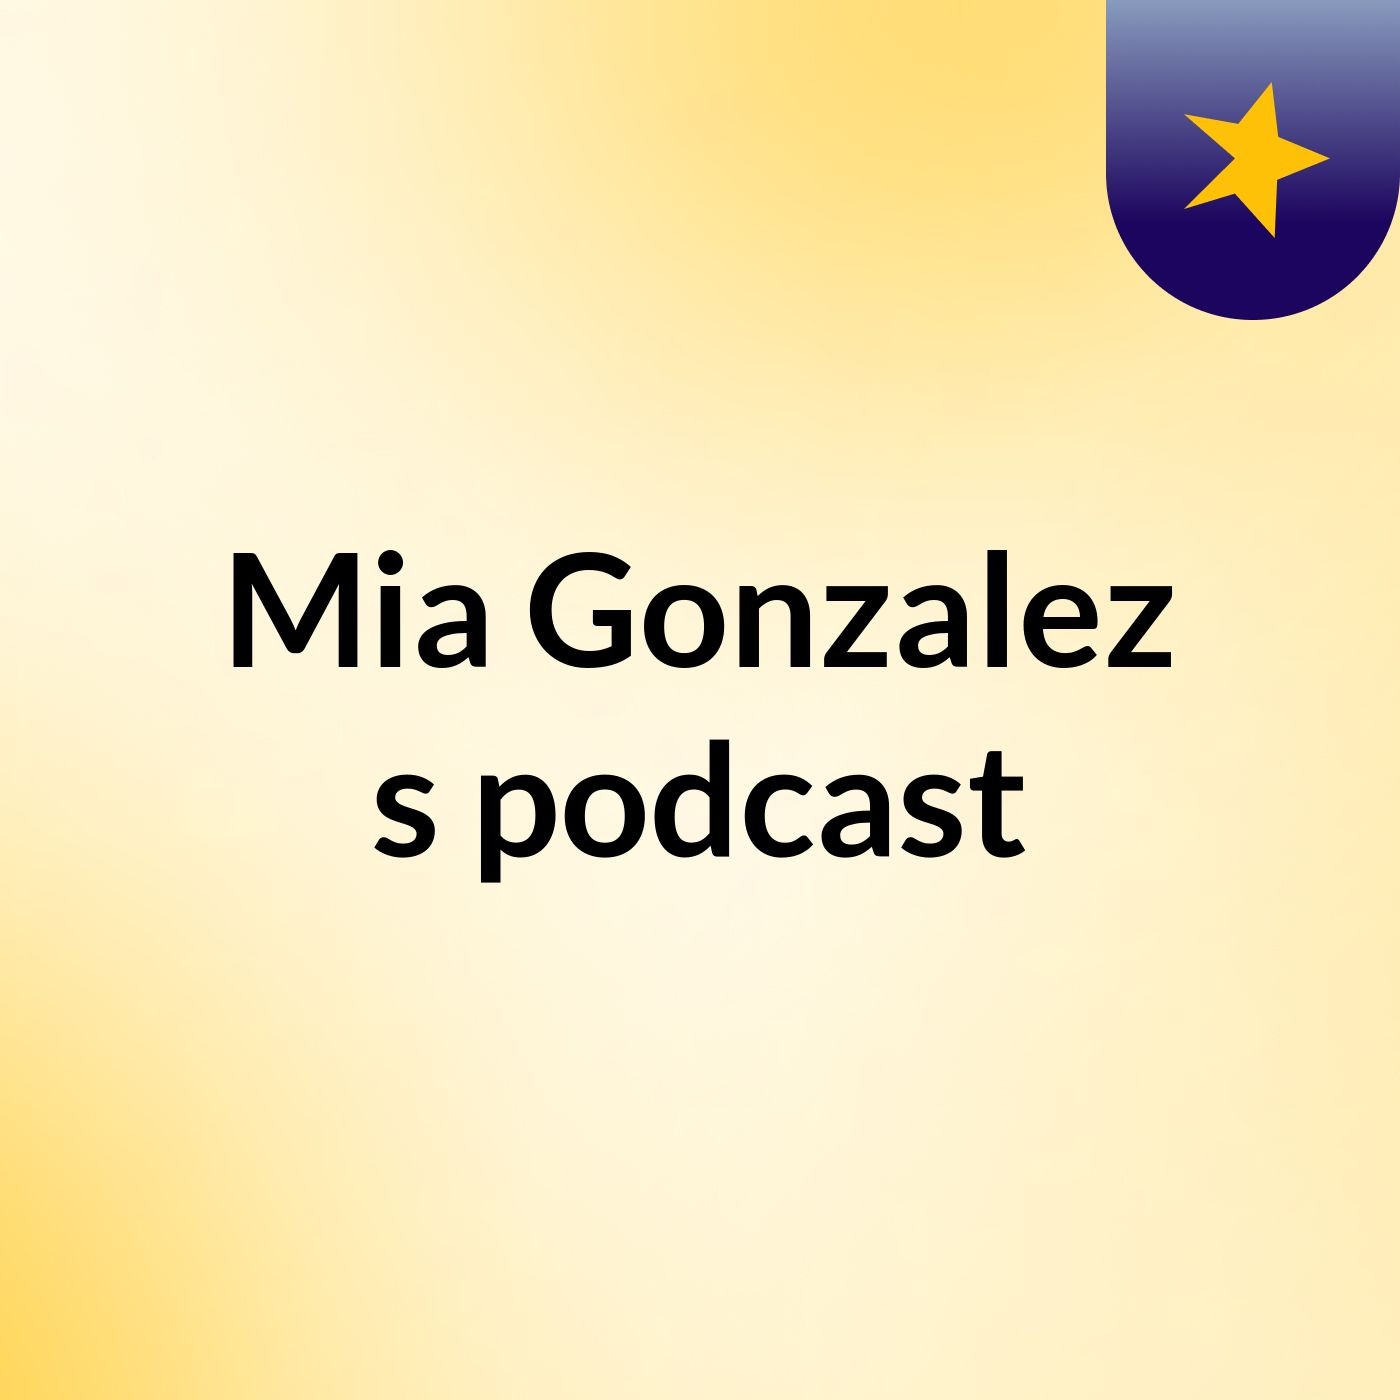 Episode 3 - Mia Gonzalez's podcast